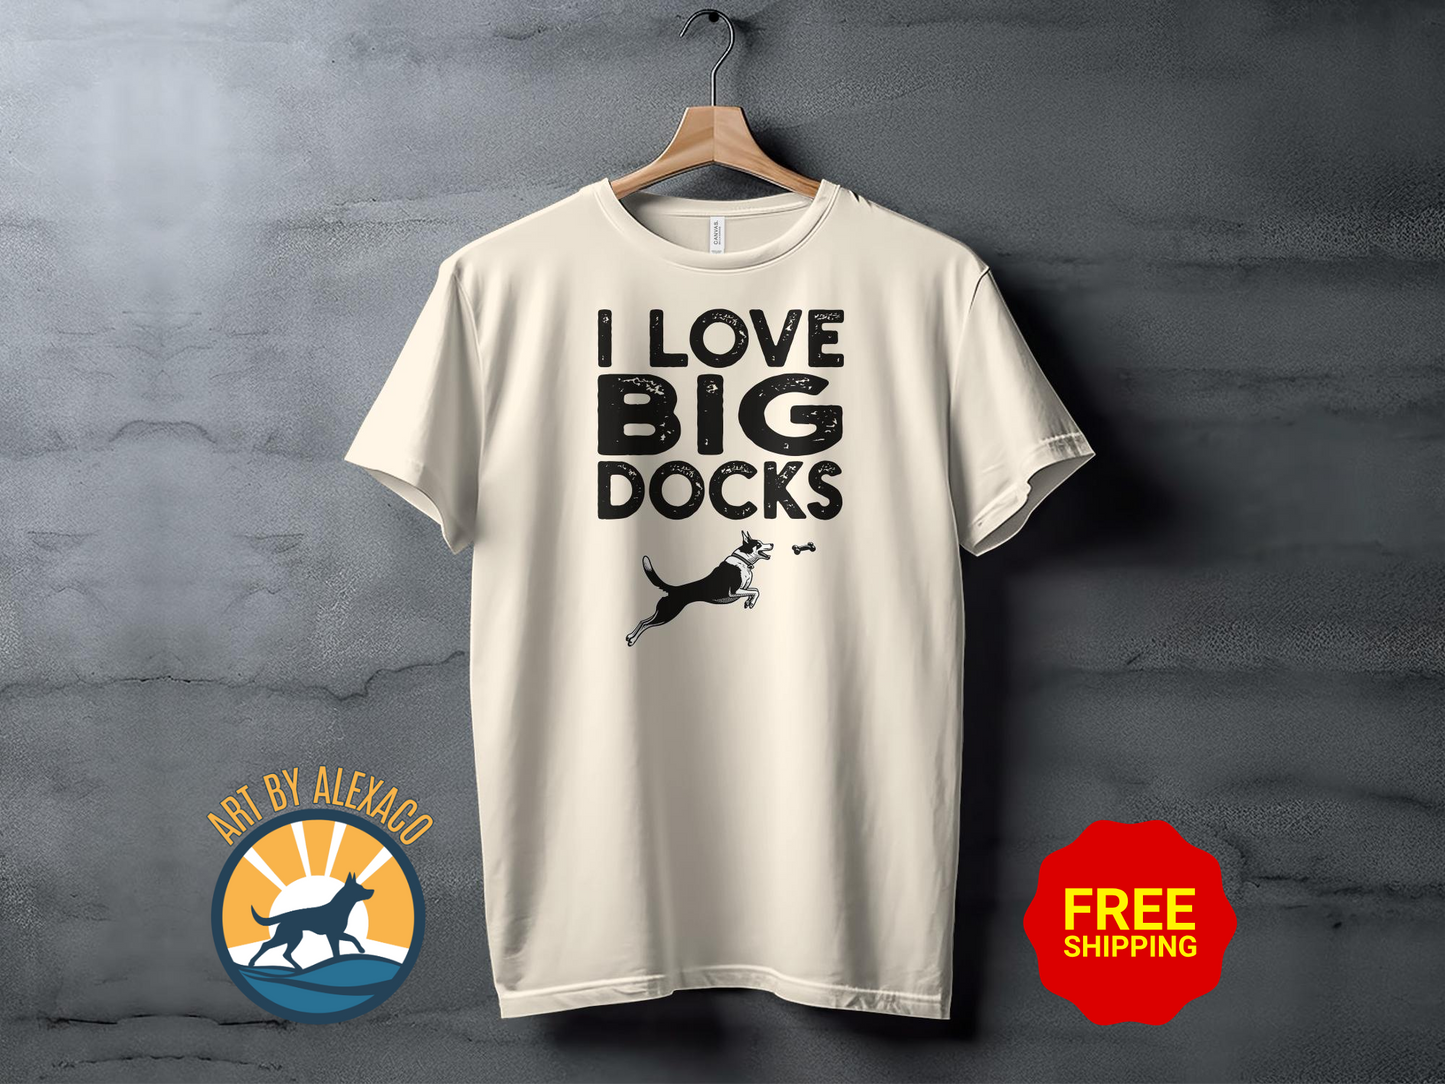 Funny Dock Diving Unisex T-Shirt: "I Love Big Docks"